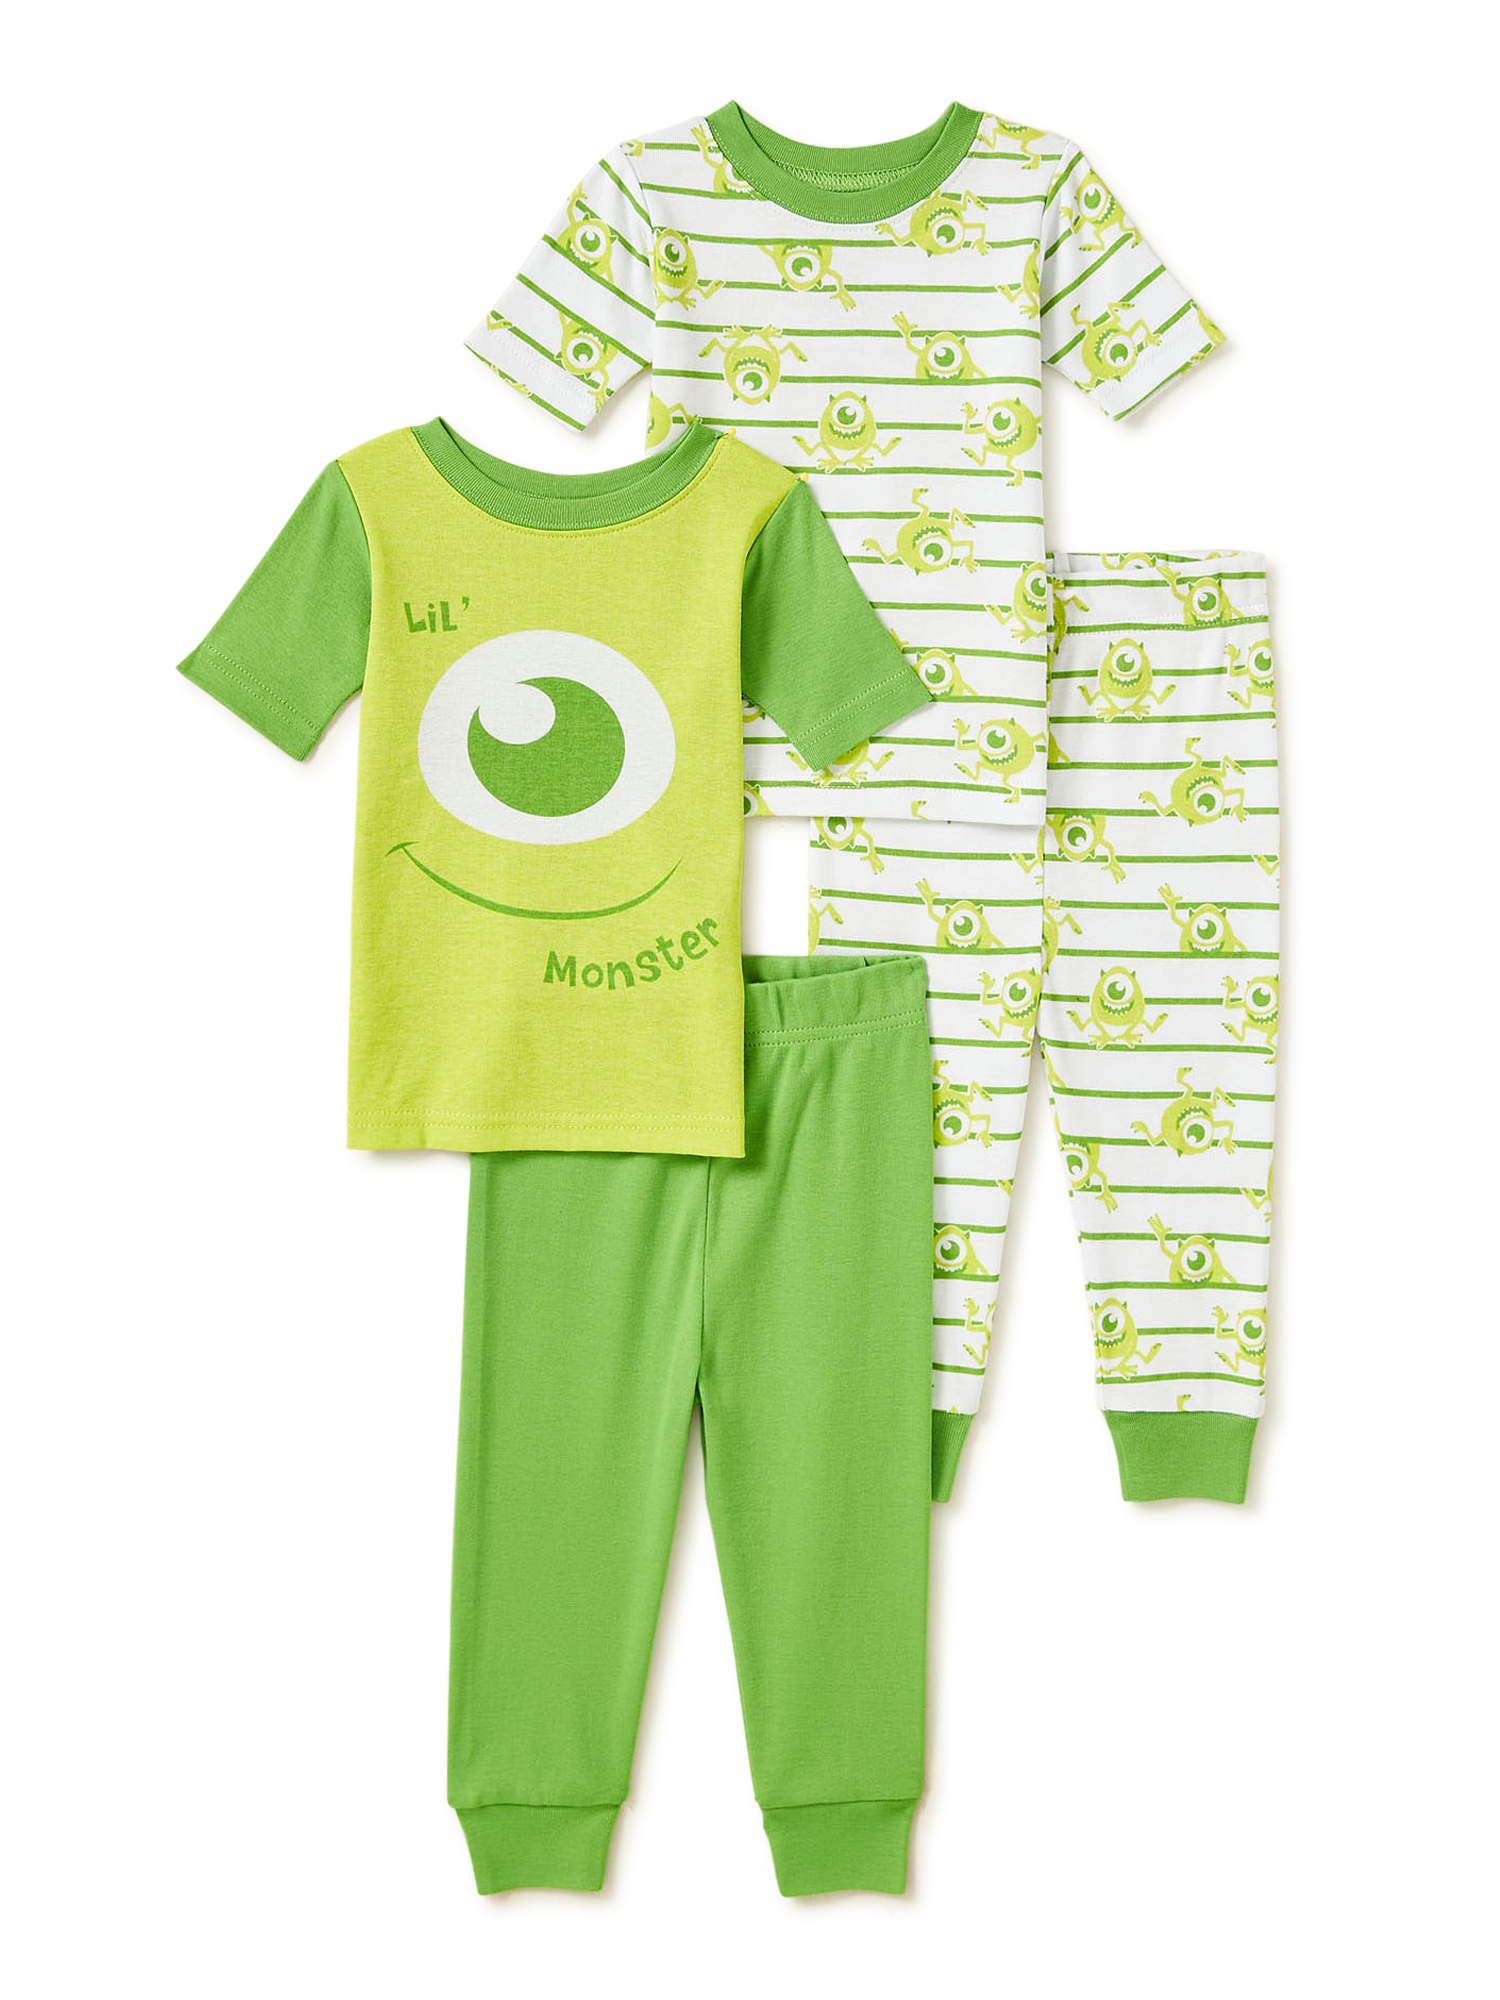 Monsters Inc. Toddler Boys Snug Fit Cotton Short Sleeve T-Shirt & Pants, 4-Piece Pajama Set, Sizes 9M-24M - image 1 of 3